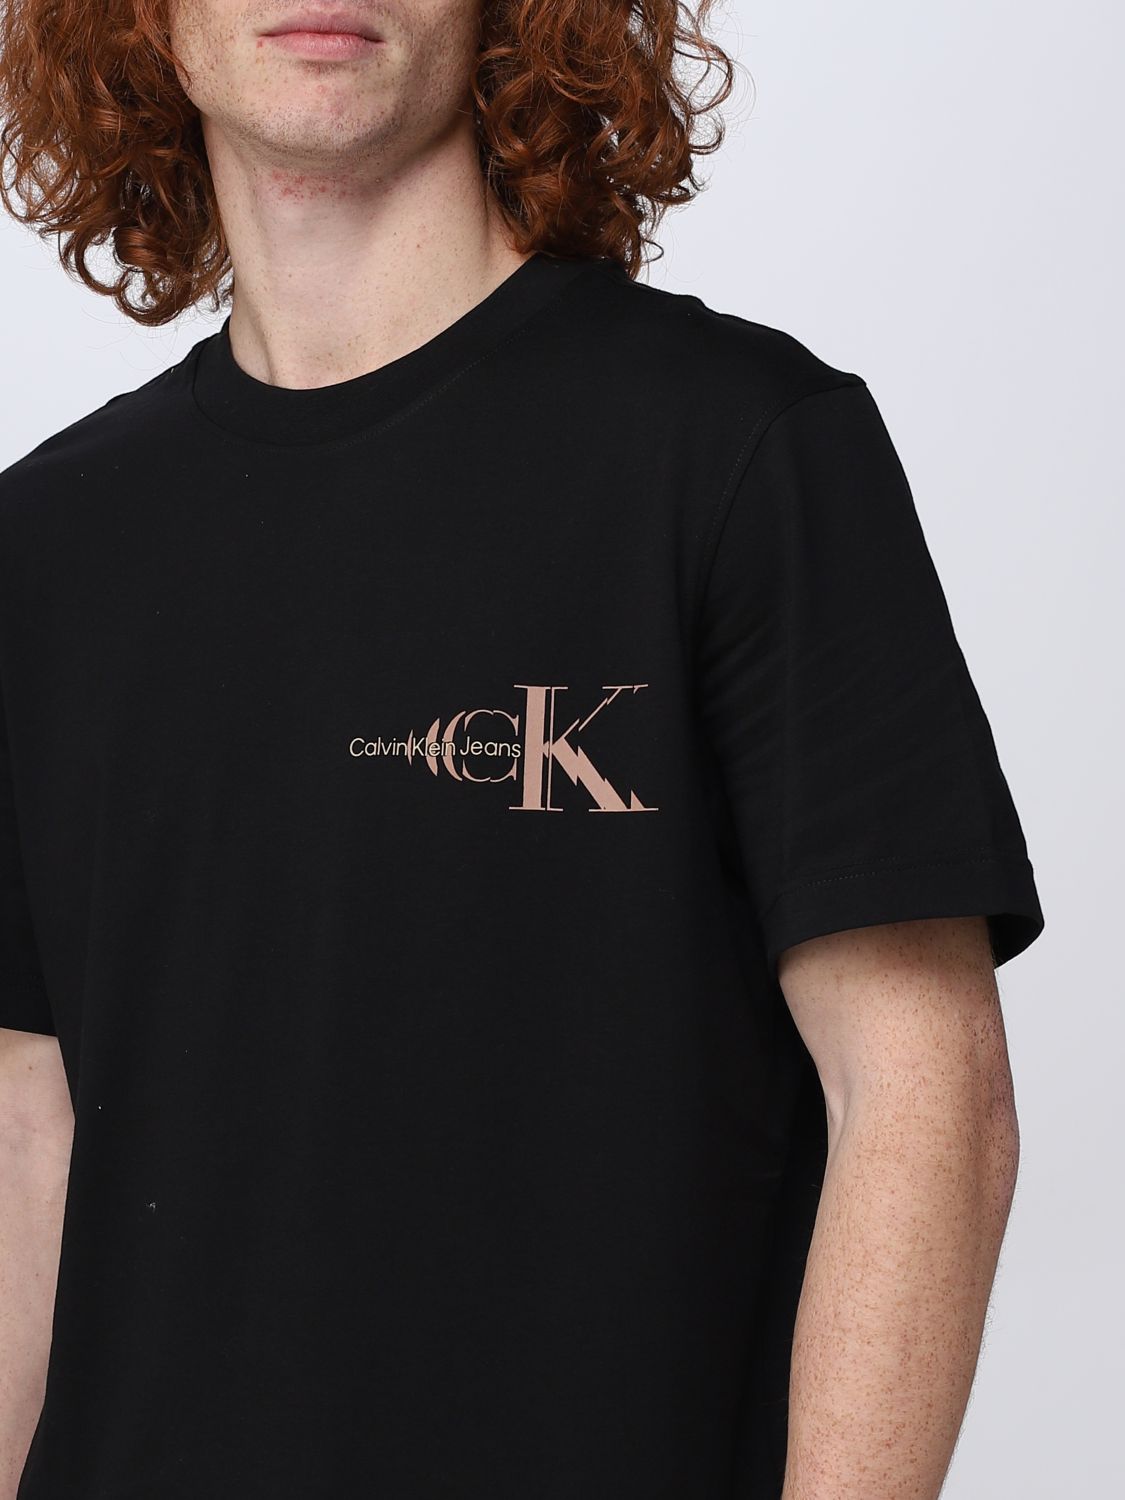 moordenaar Minachting Onderdompeling CALVIN KLEIN JEANS: t-shirt for man - Black | Calvin Klein Jeans t-shirt  J30J322632 online on GIGLIO.COM